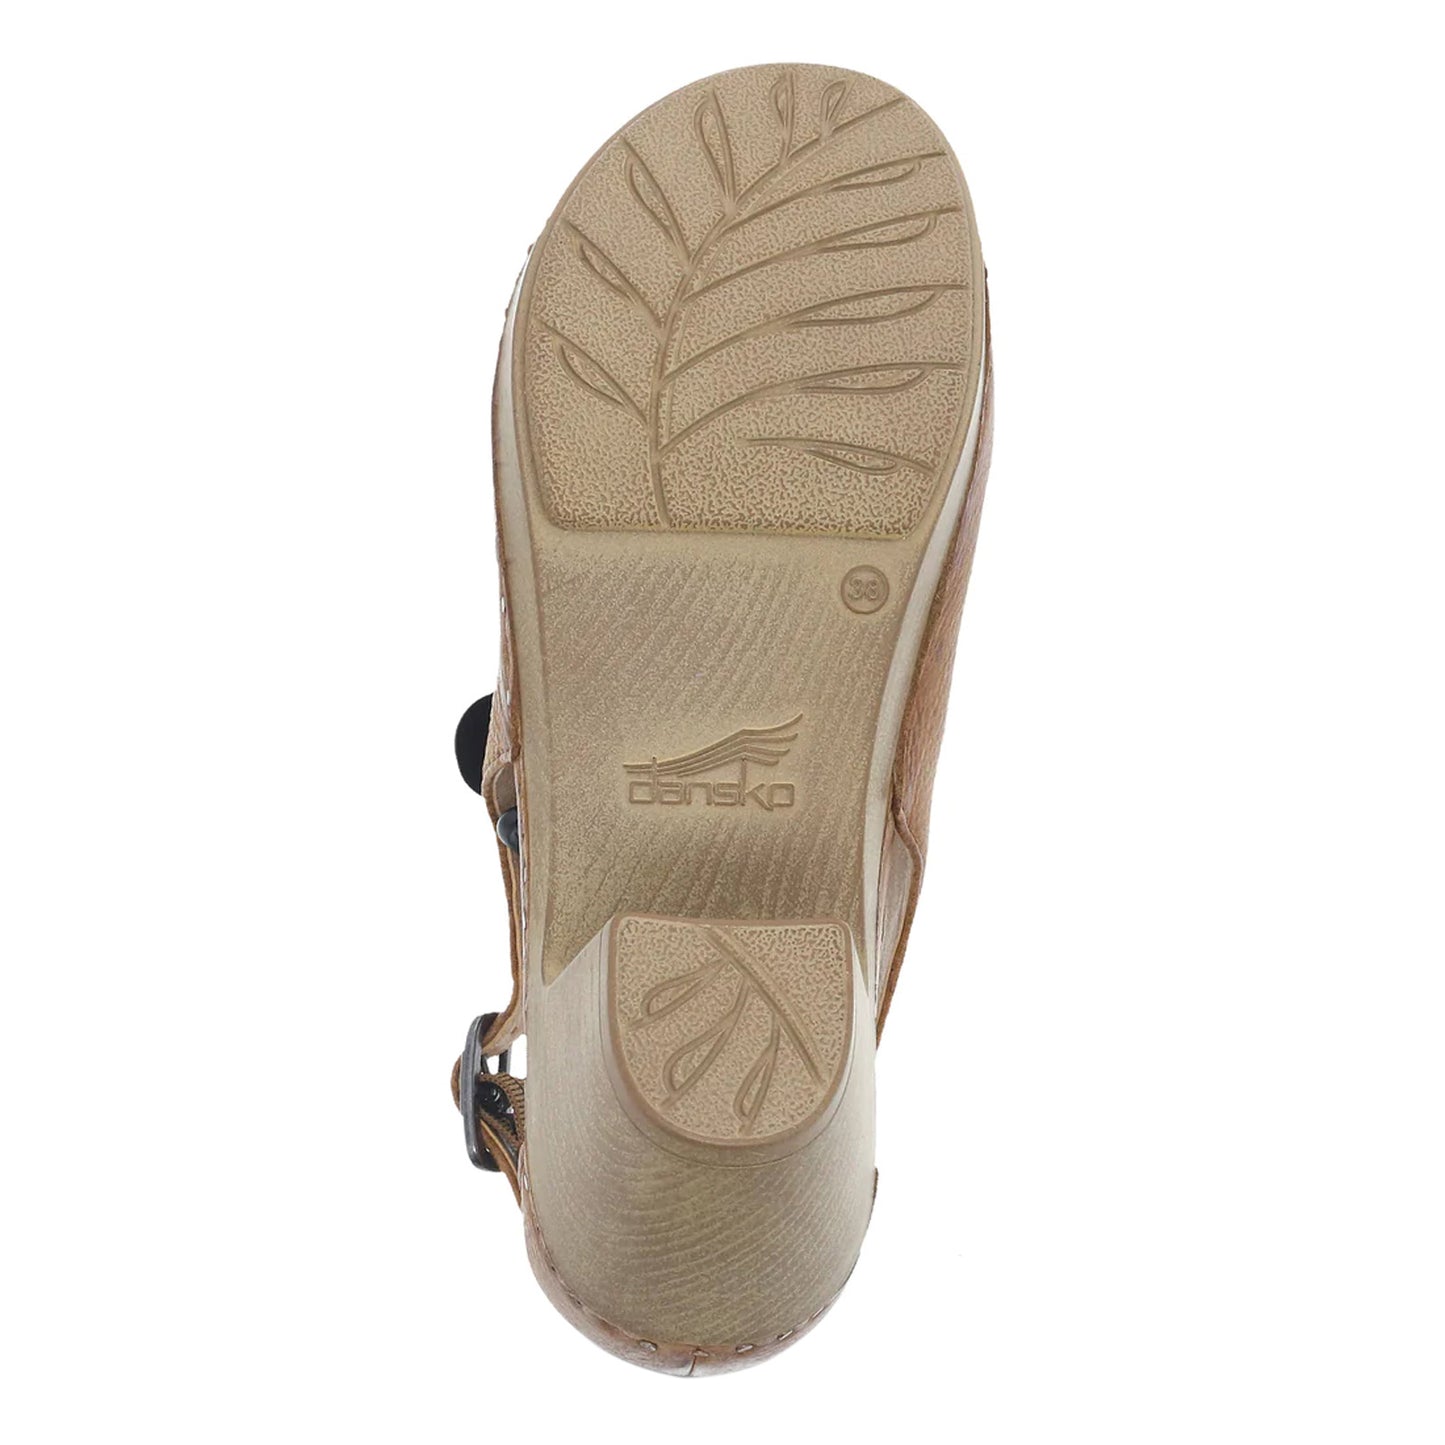 Peltz Shoes  Women's Dansko Sassy Clog Tan 1831-371500